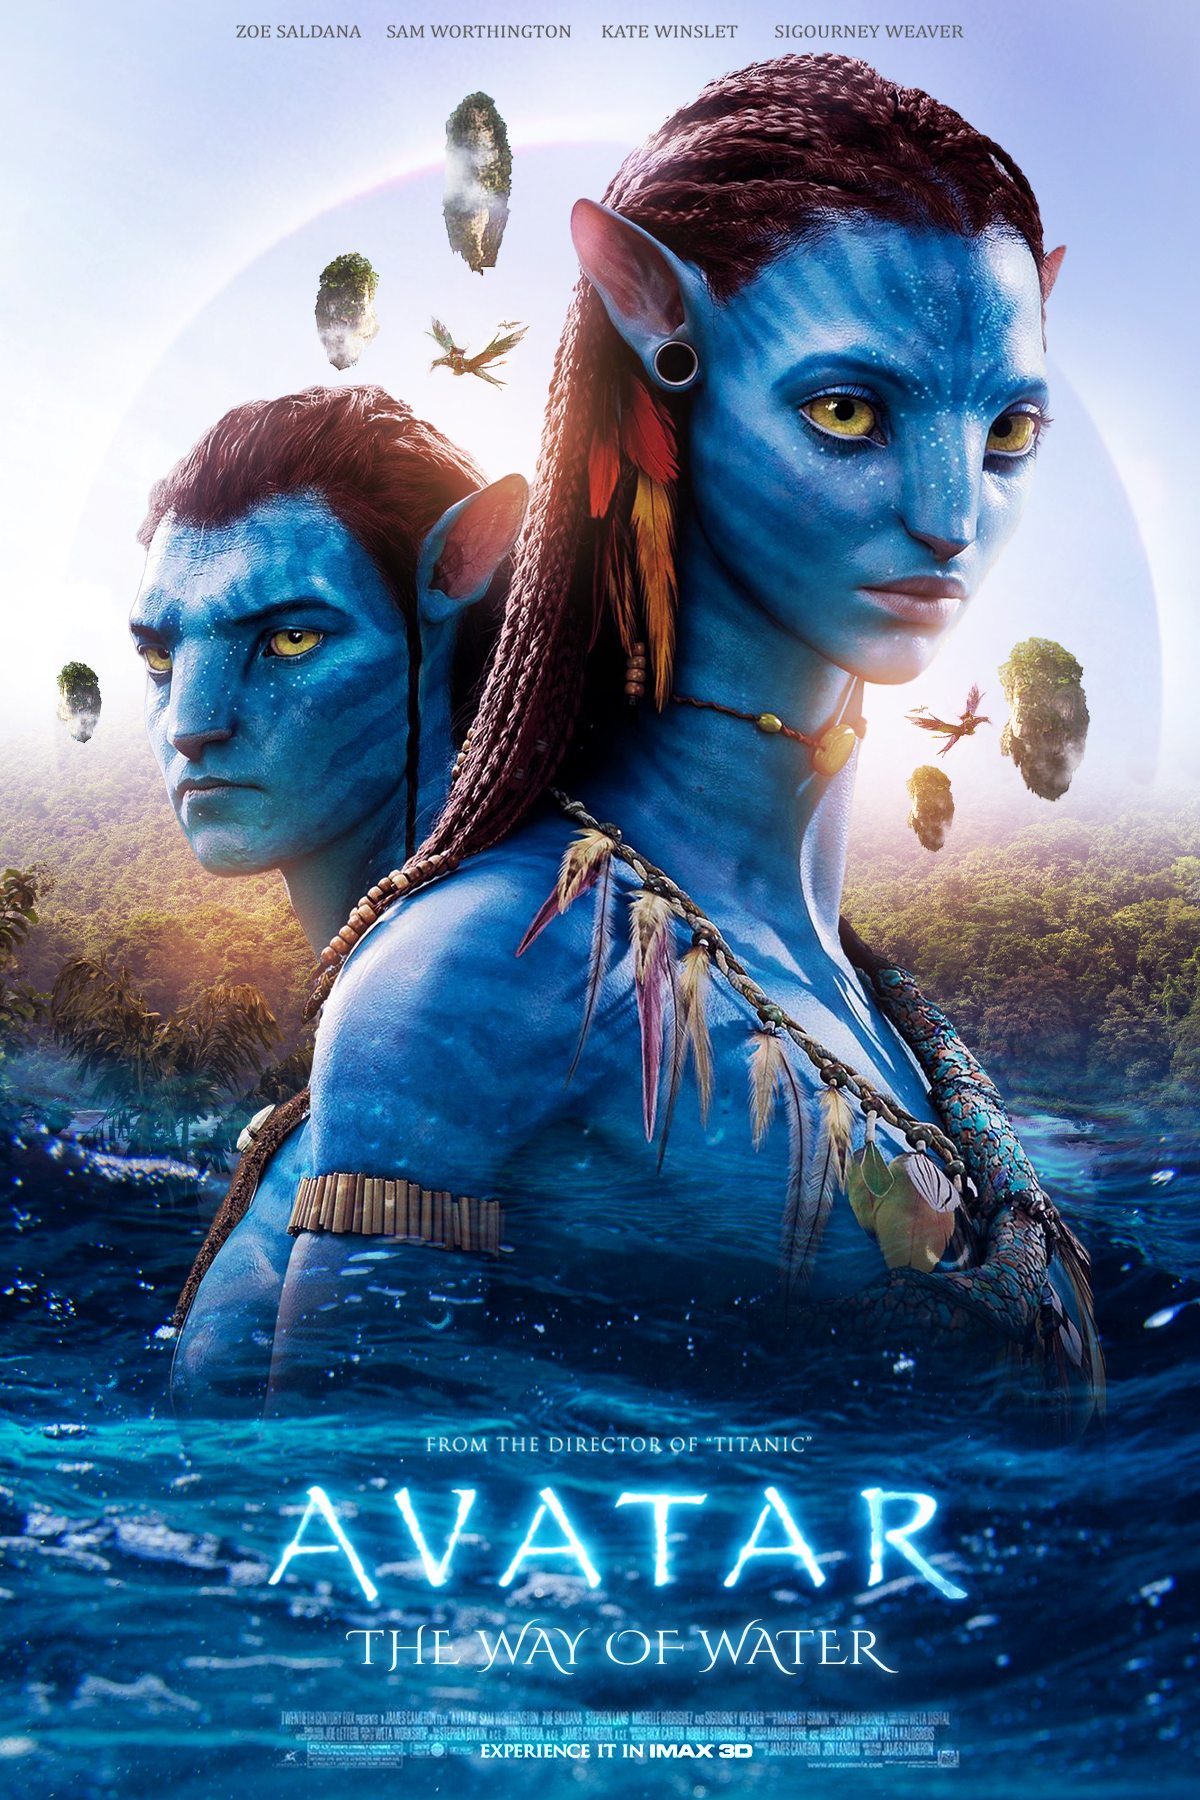 Stiahni si 3D Filmy Avatar: Cesta vody / Avatar The Way of Water (2022)[3D][CZ,SK,EN] = CSFD 81%